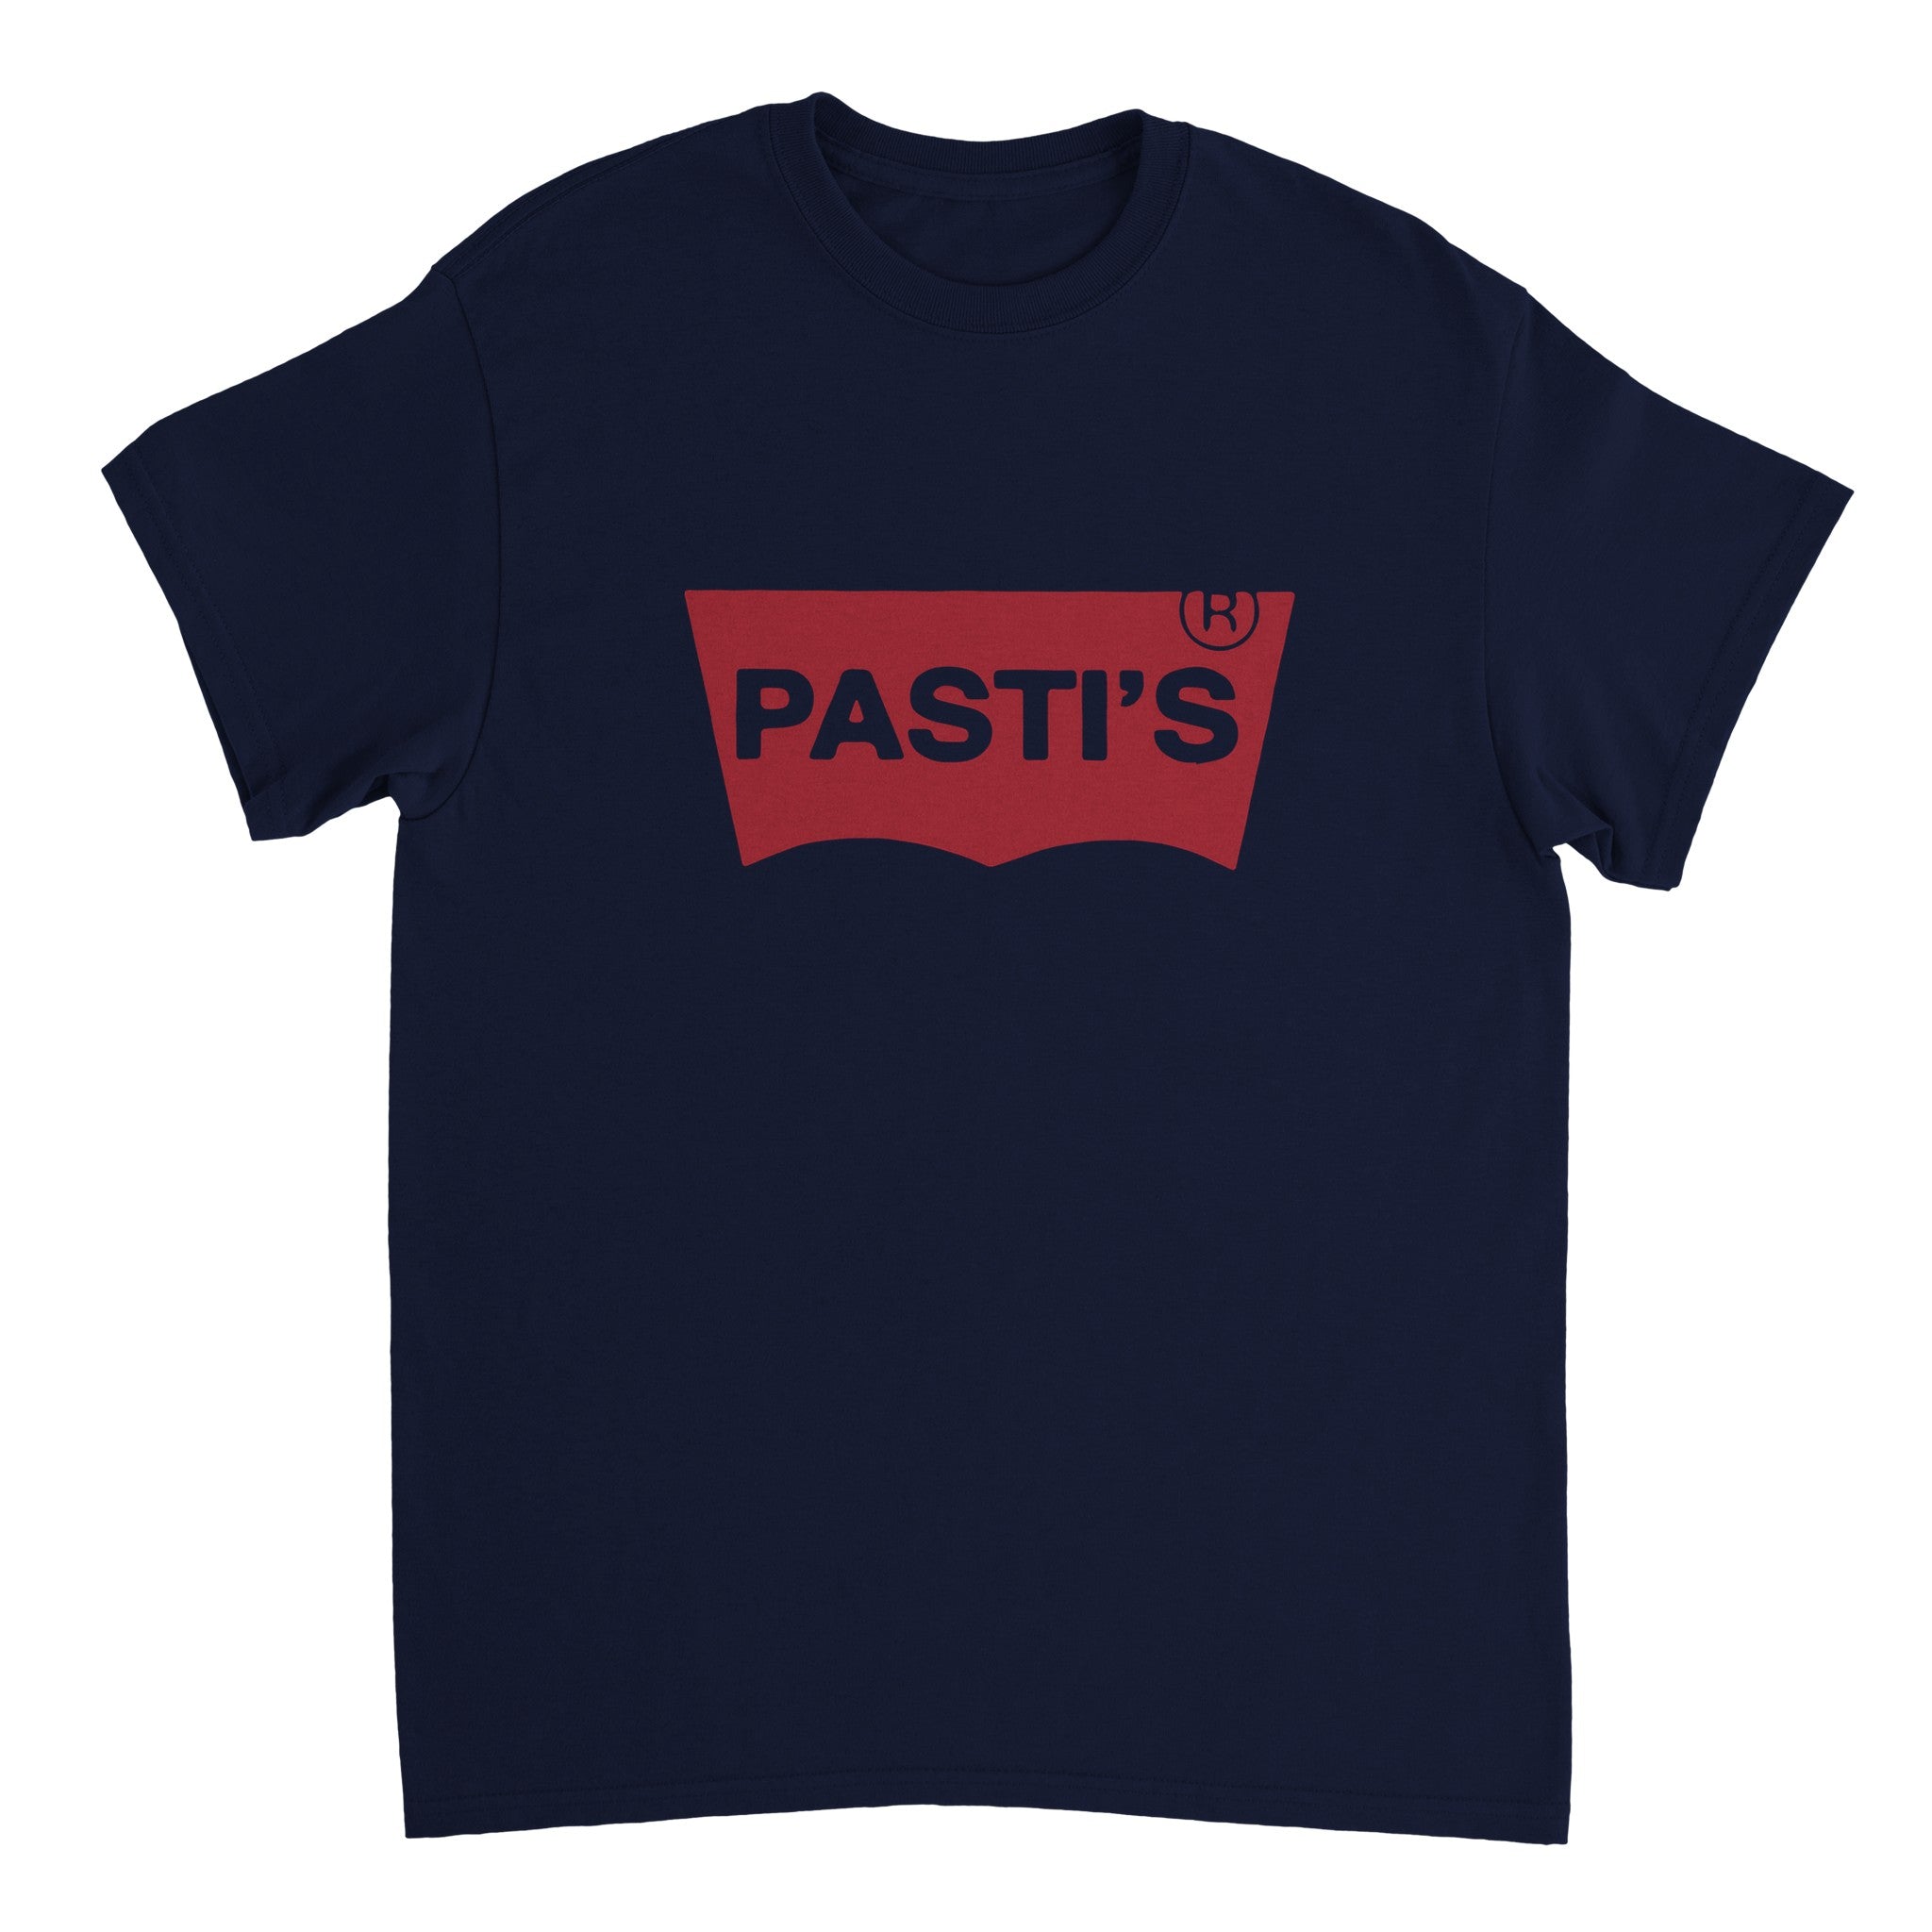 T-shirt Pastis "Pasti's" | Mixte